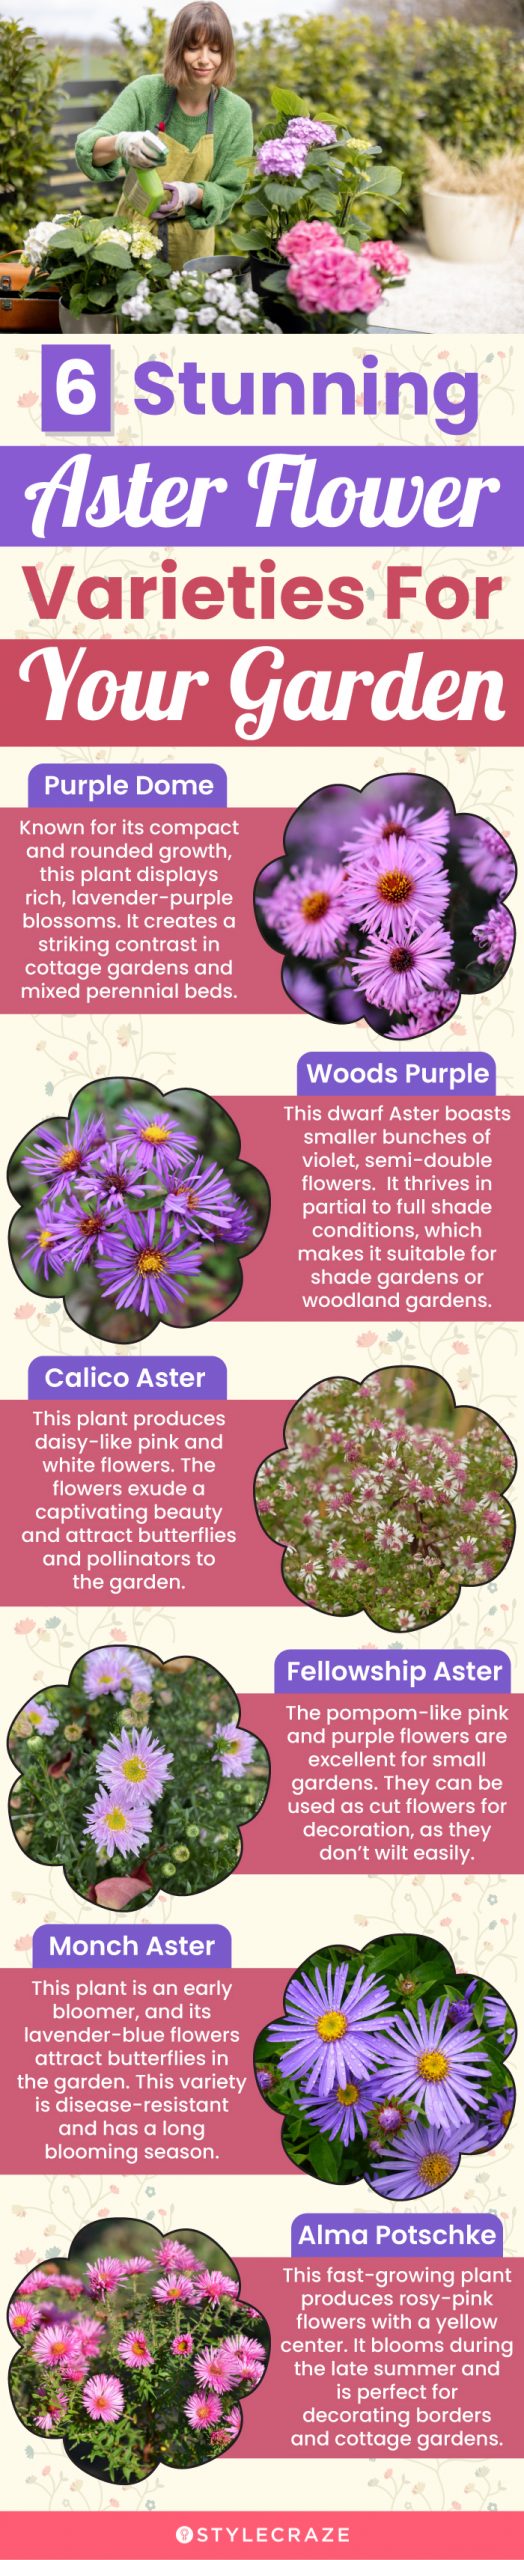 6 stunning aster flower varieties for your garden (infographic)